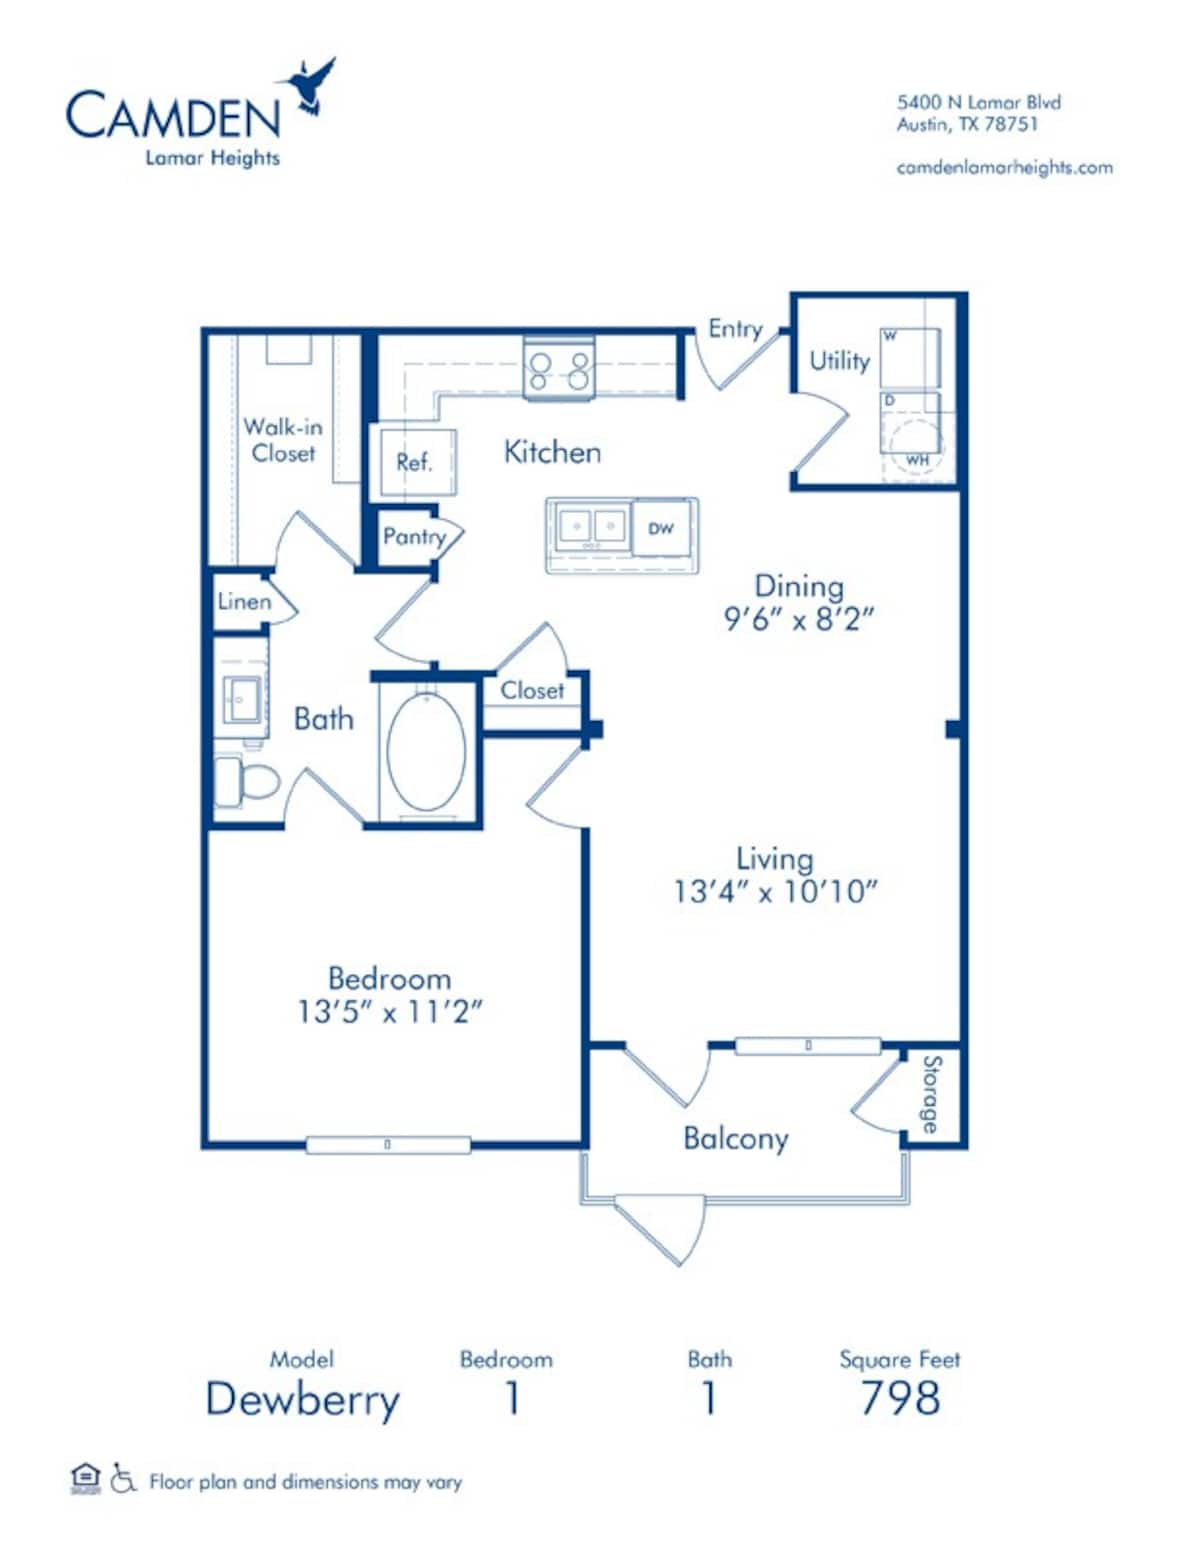 Floorplan diagram for Dewberry, showing 1 bedroom